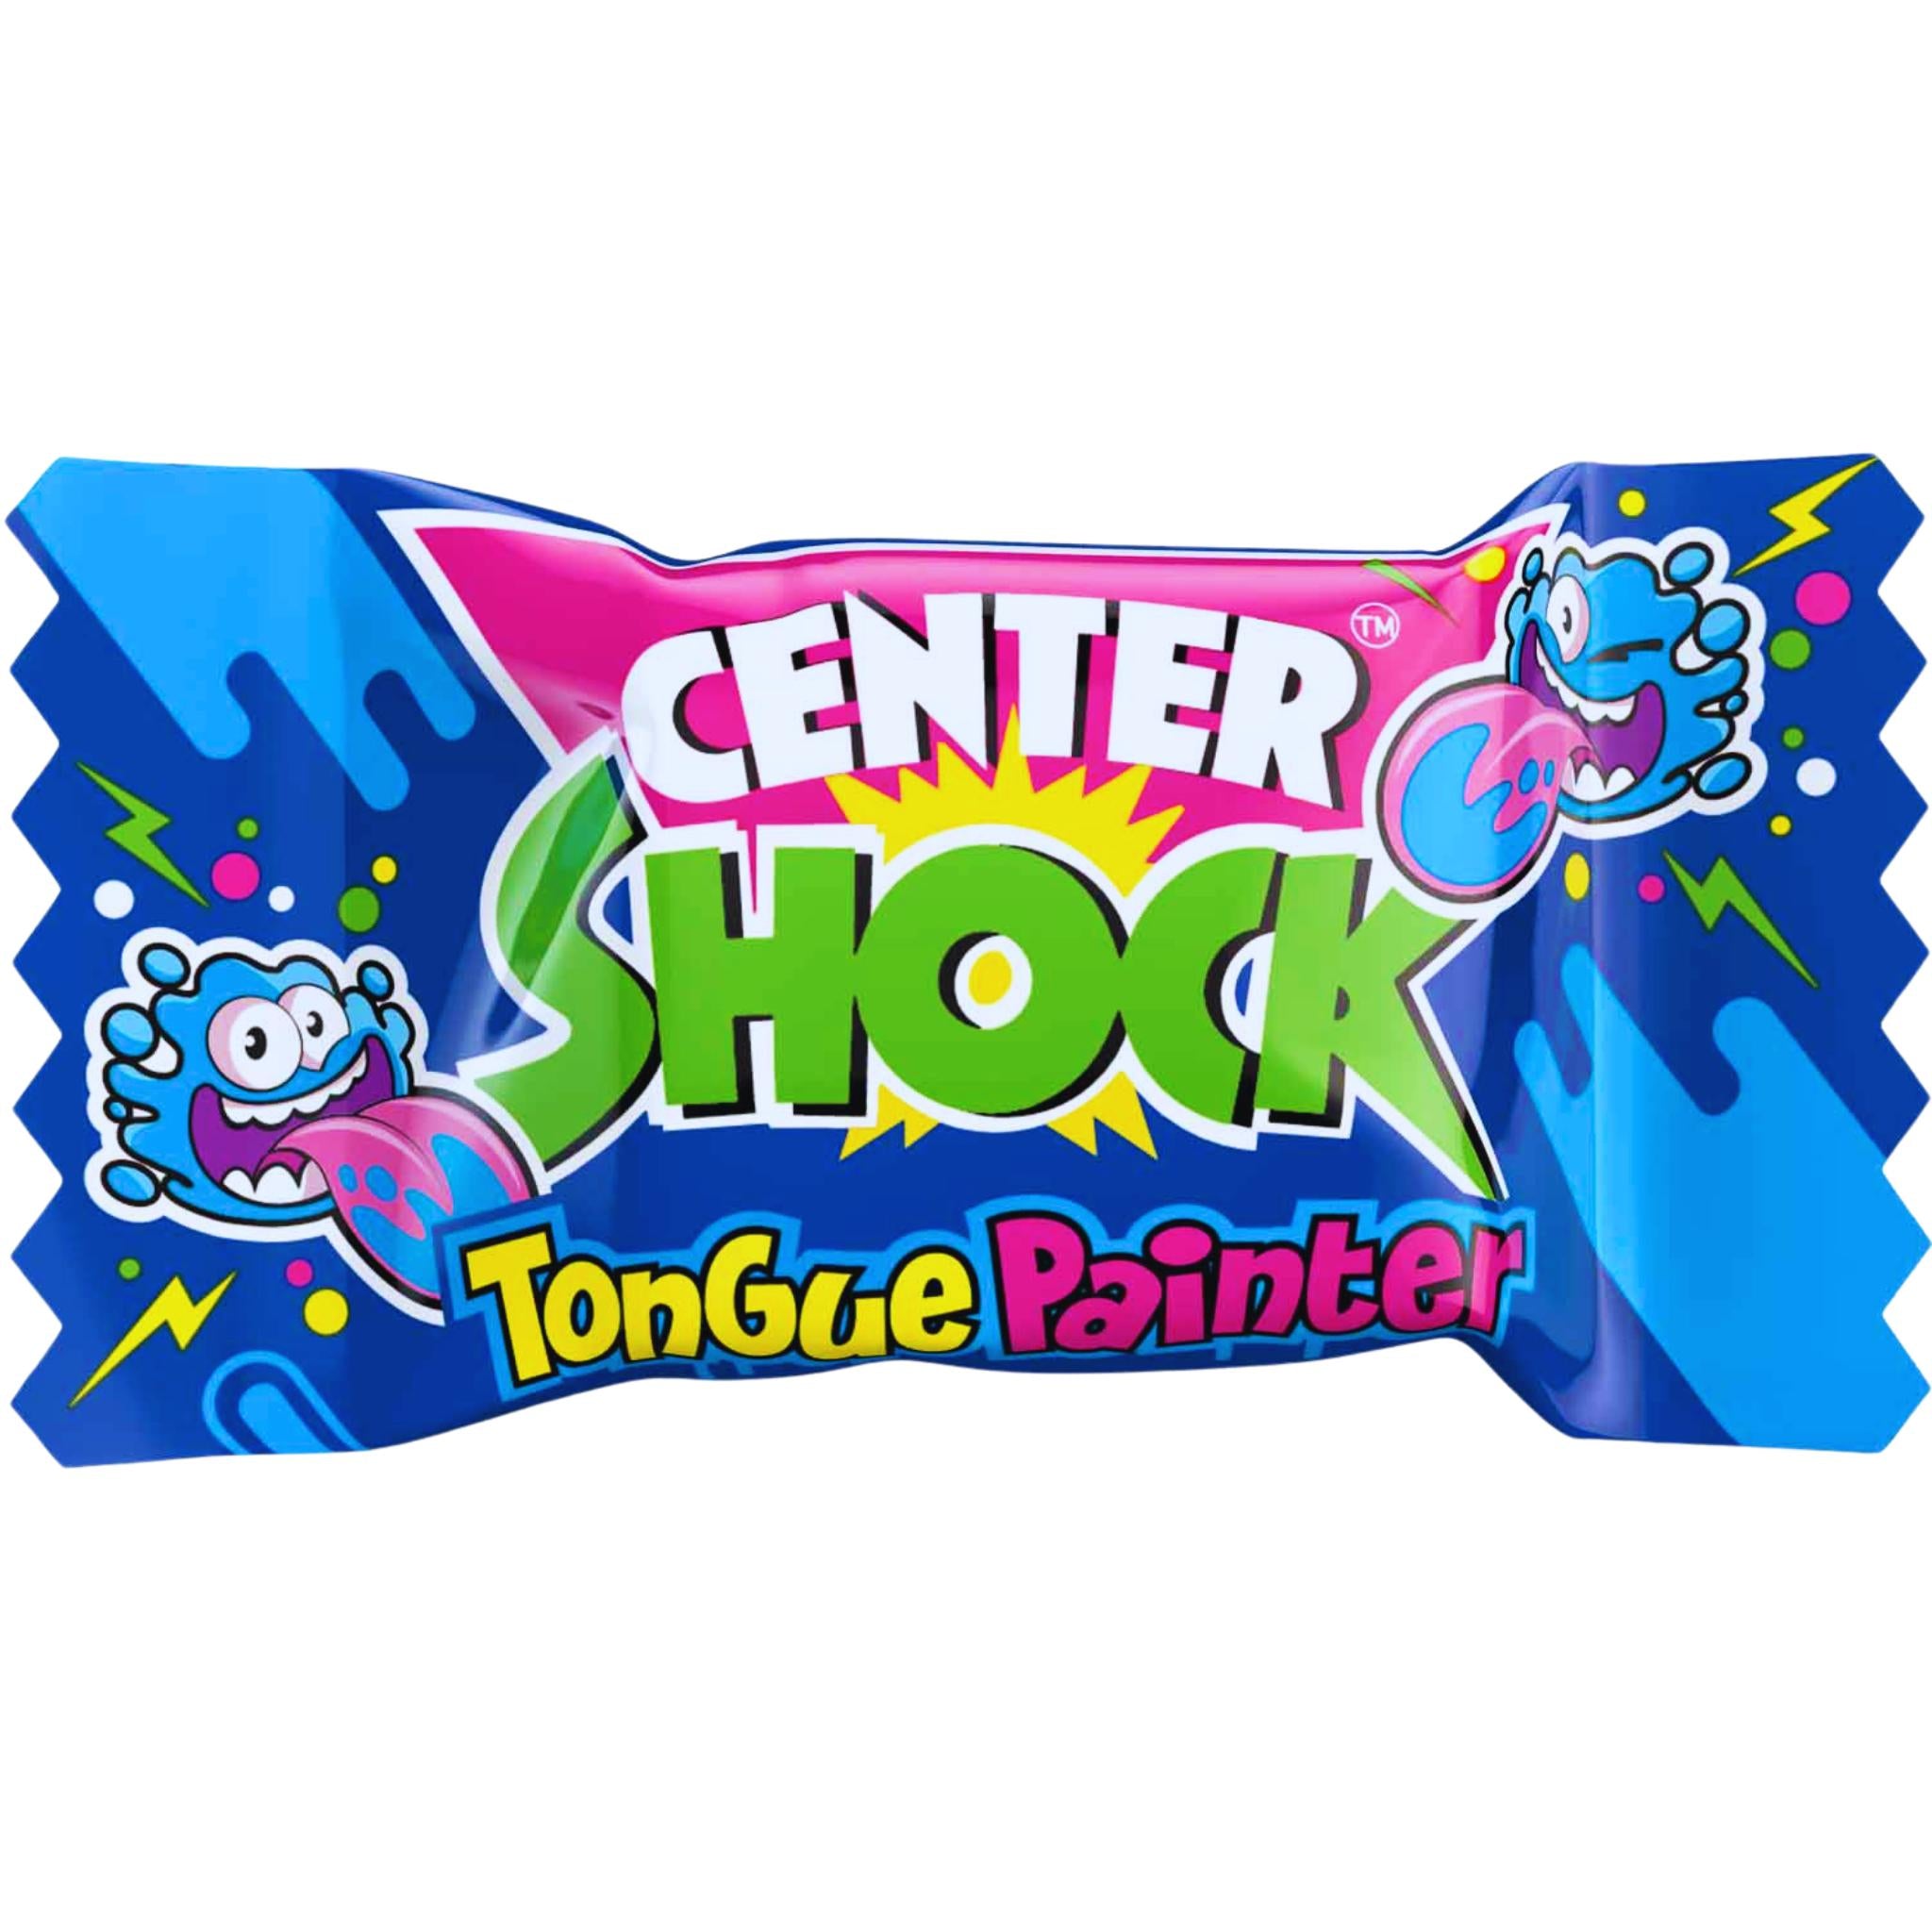 Center Shock Tongue Painter - 4g